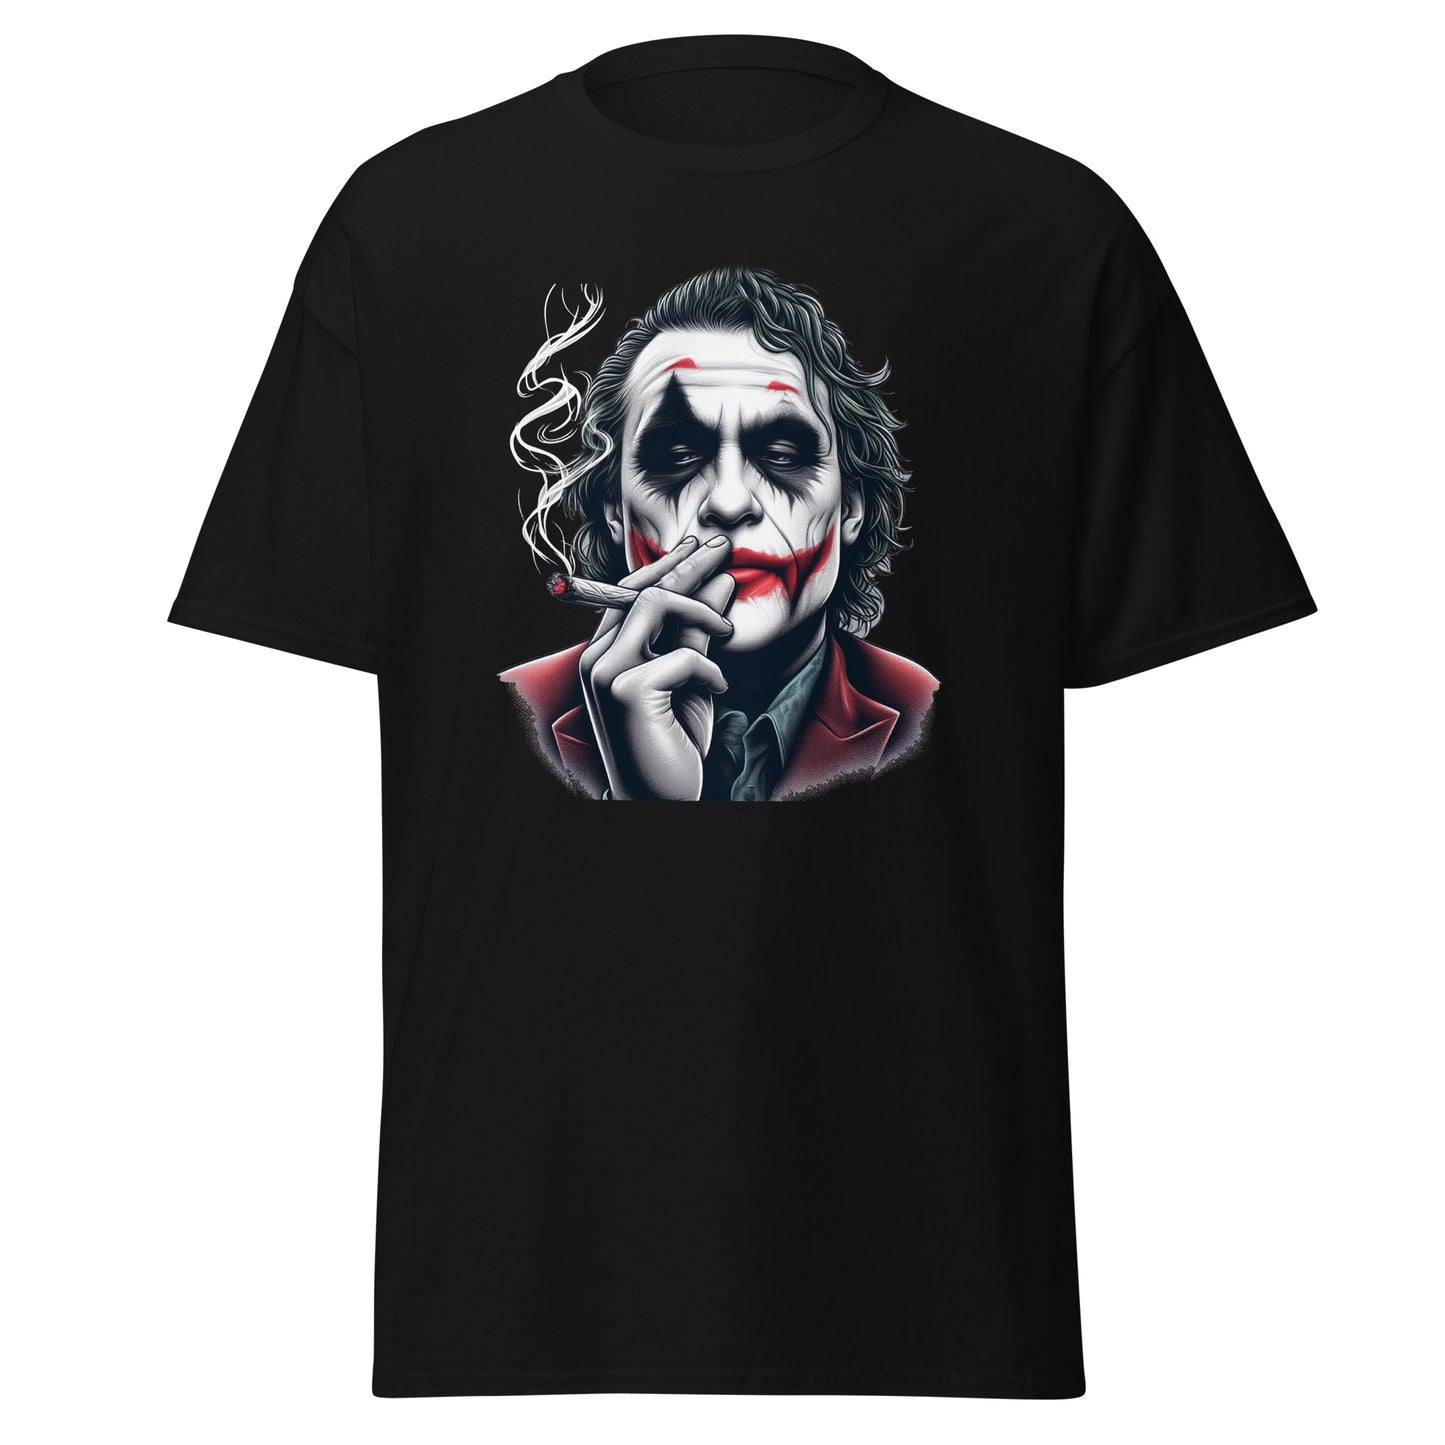 Smoking Joker T-Shirt - Embrace the Enigmatic Elegance